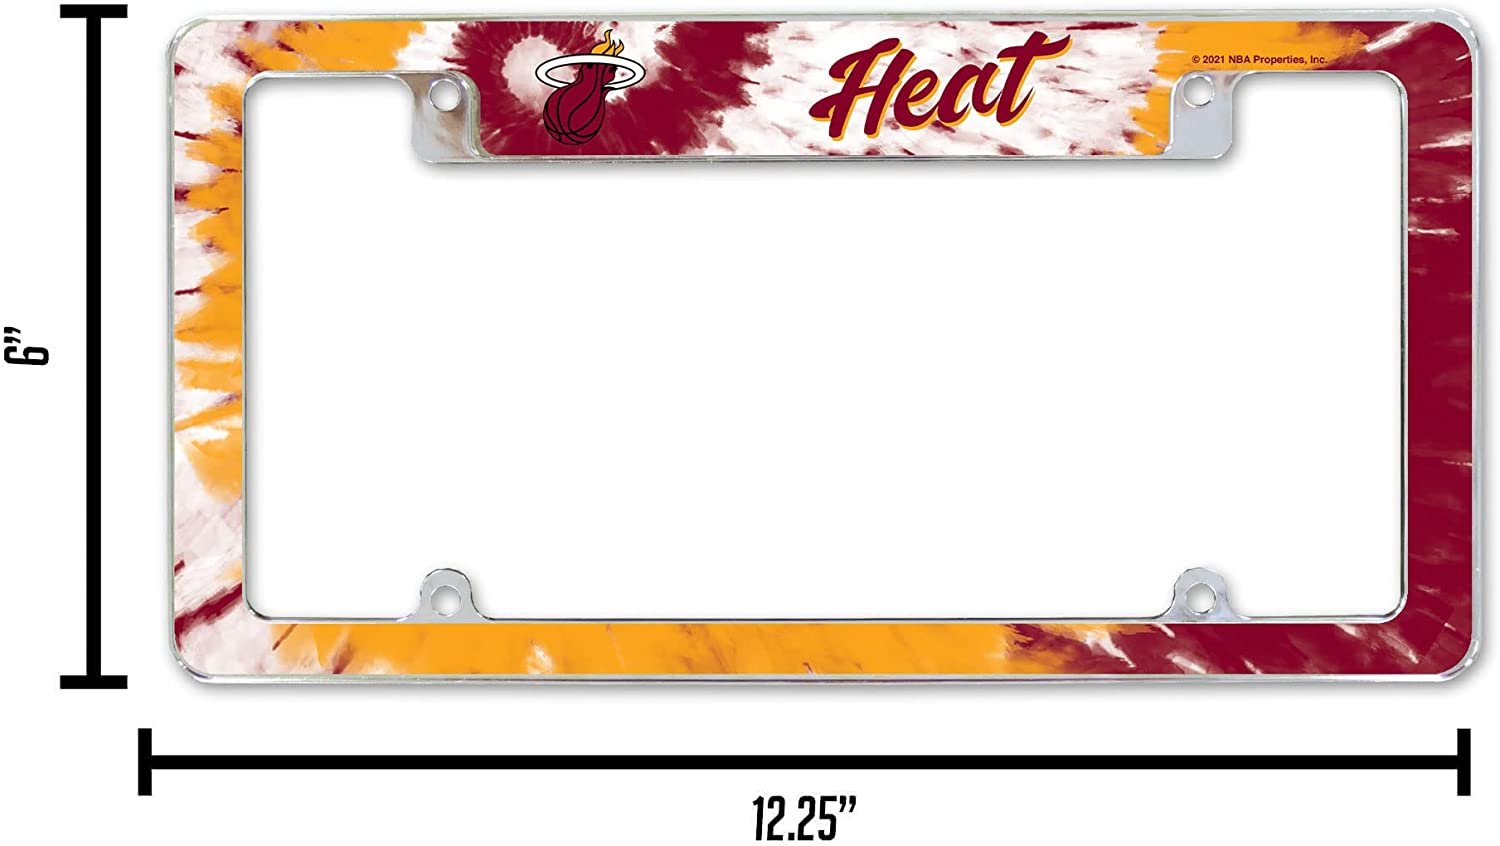 Miami Heat Metal License Plate Frame Chrome Tag Cover Tie Dye Design 6x12 Inch